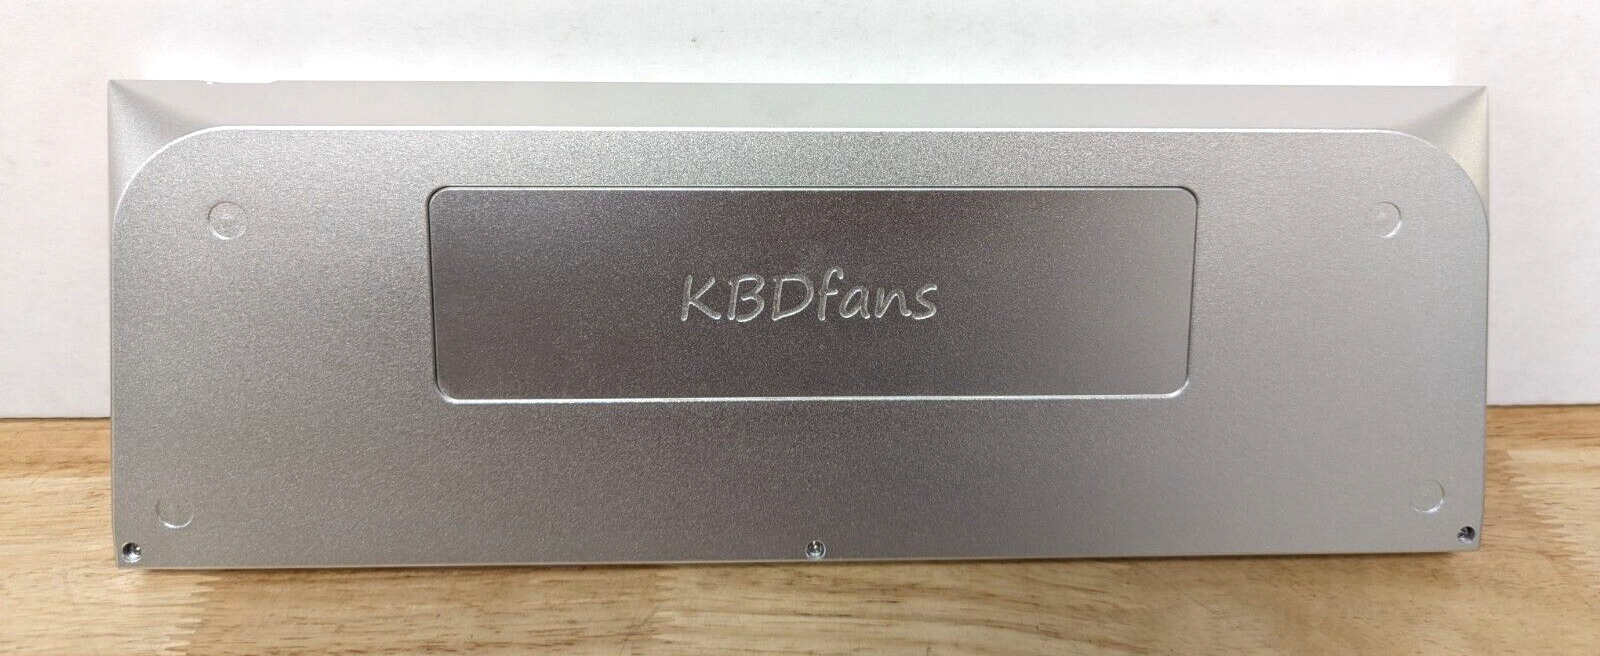 Massdrop X KBD Fans KBD66 Mechanical Keyboard Kit Case Silver MDX-11969-2